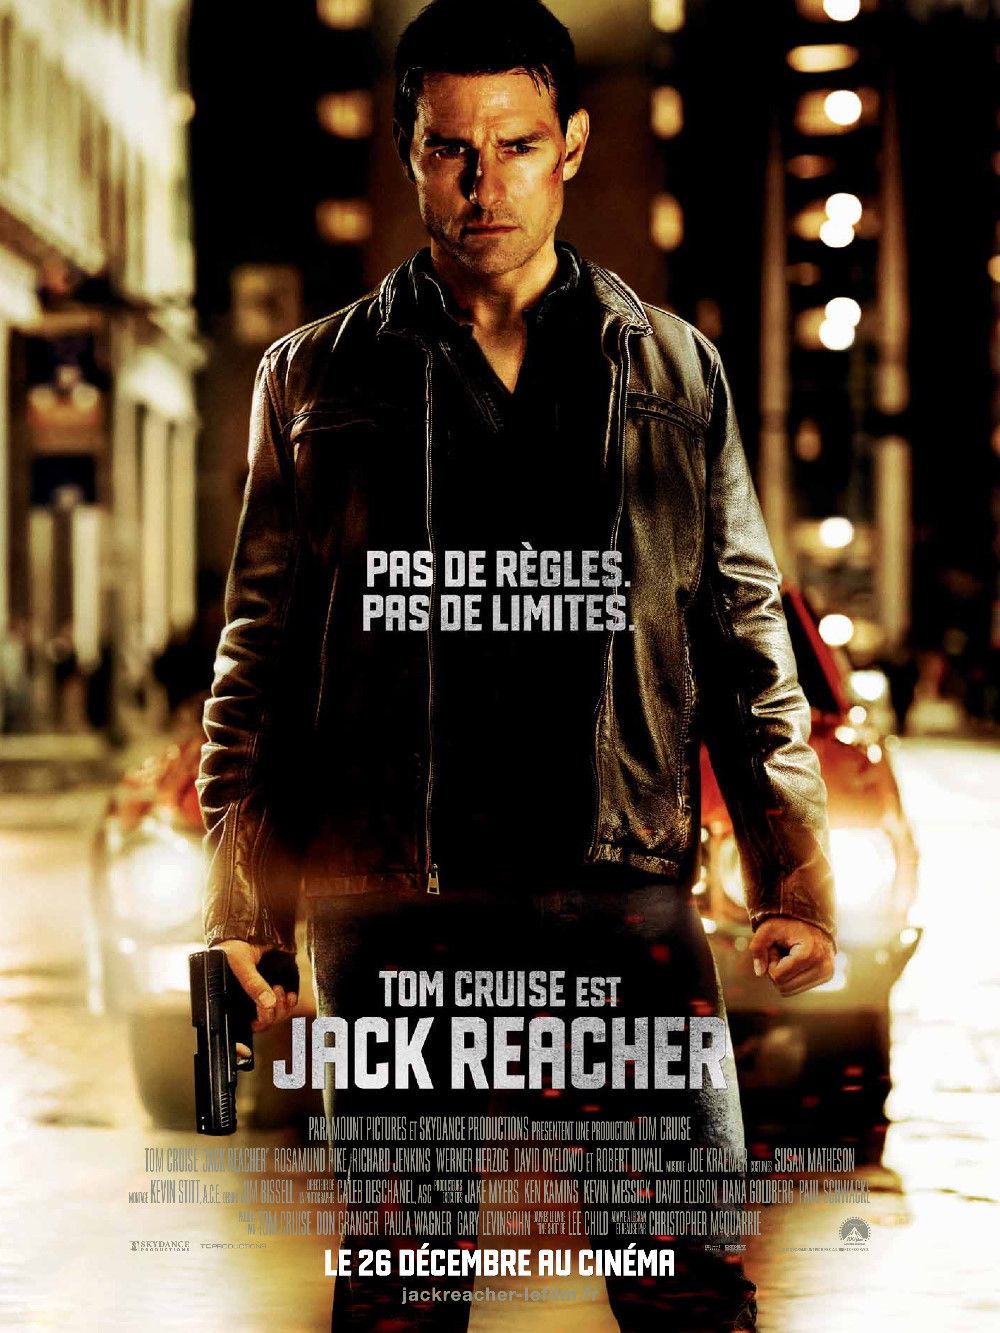 tom cruise film 2012 jack reacher